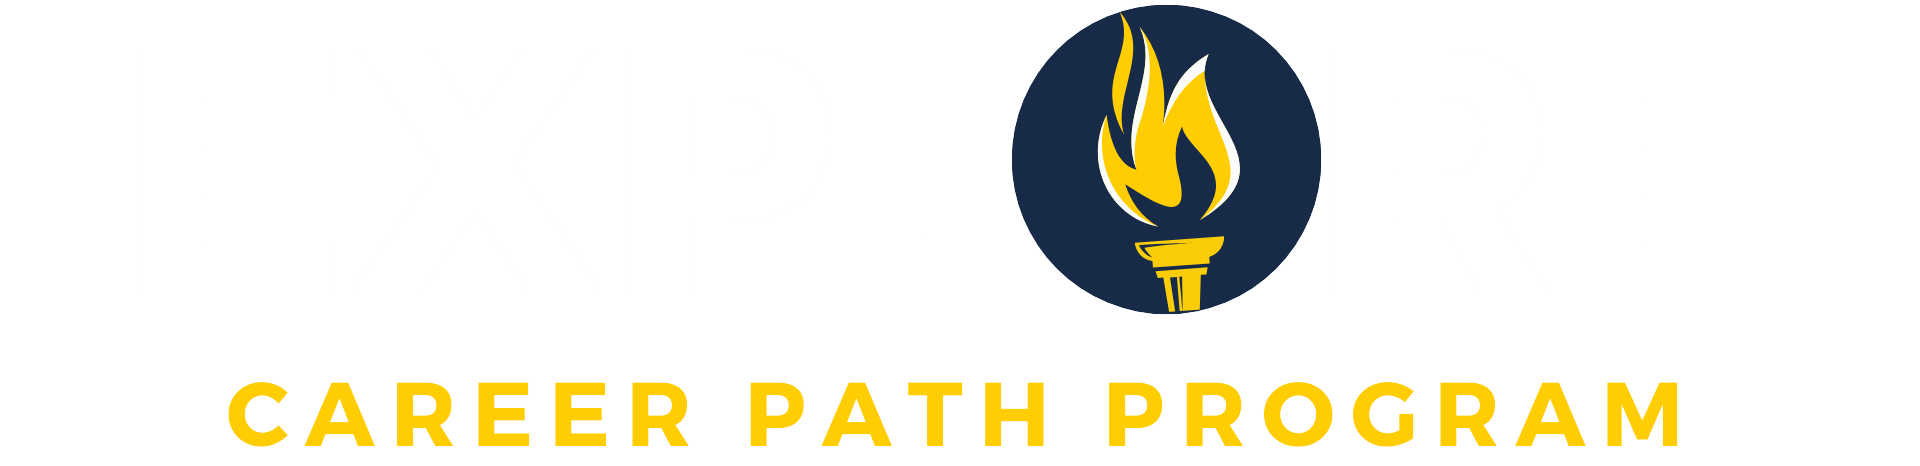 Explore Career Path Program Logo